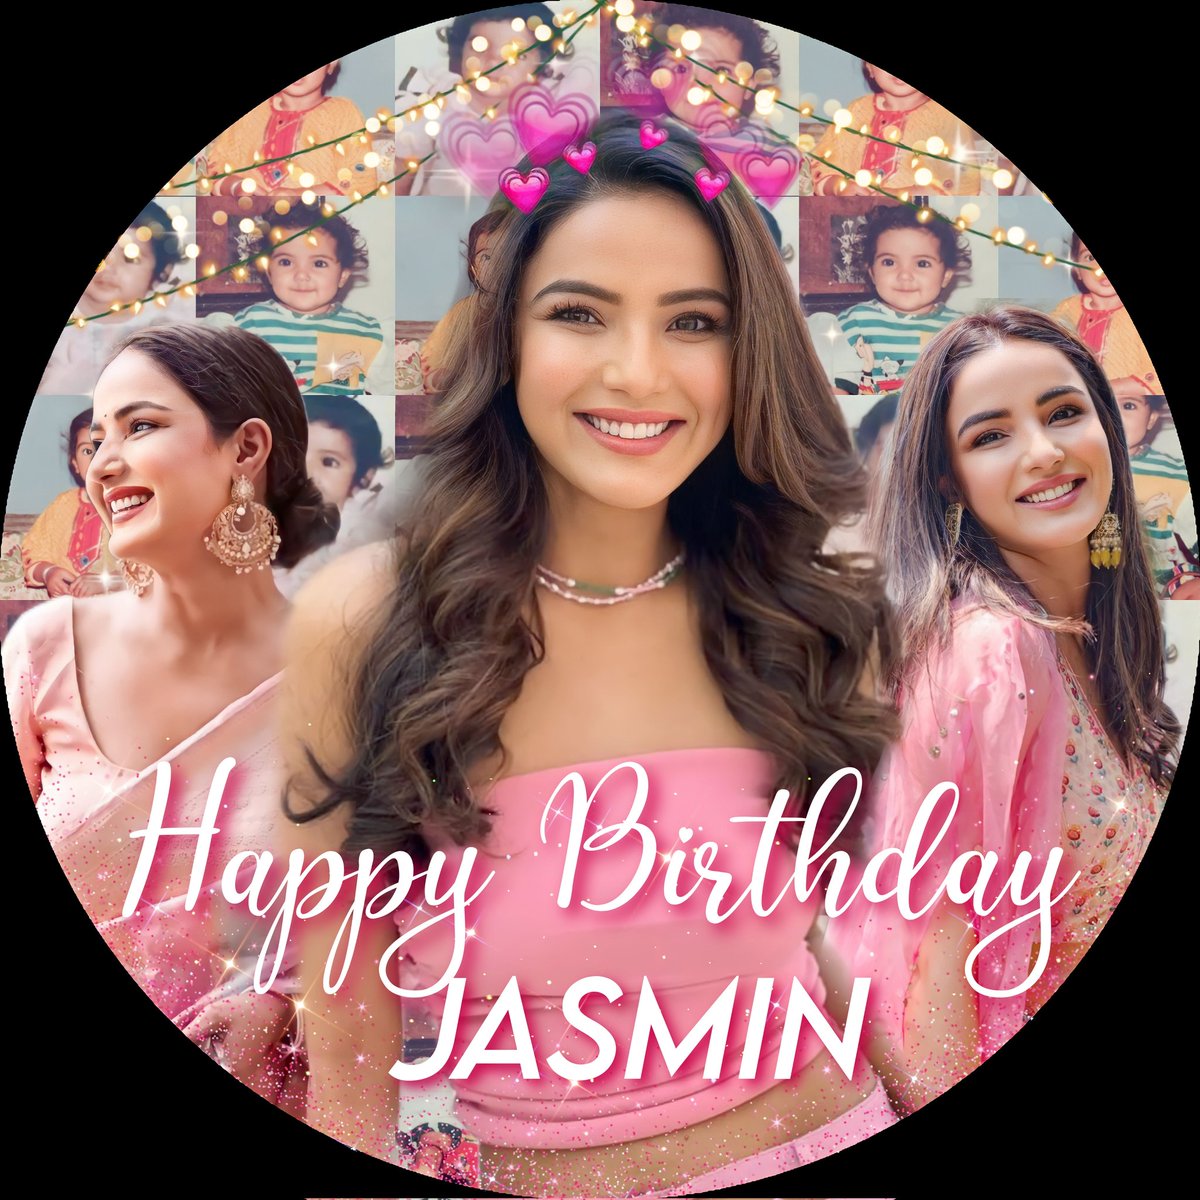 Here is my #NewProfilePic and cdp for Jasmin Bhasin Bday✨❤️
#JasminBhasin #Jasminians #BdayCountdownForJasmin